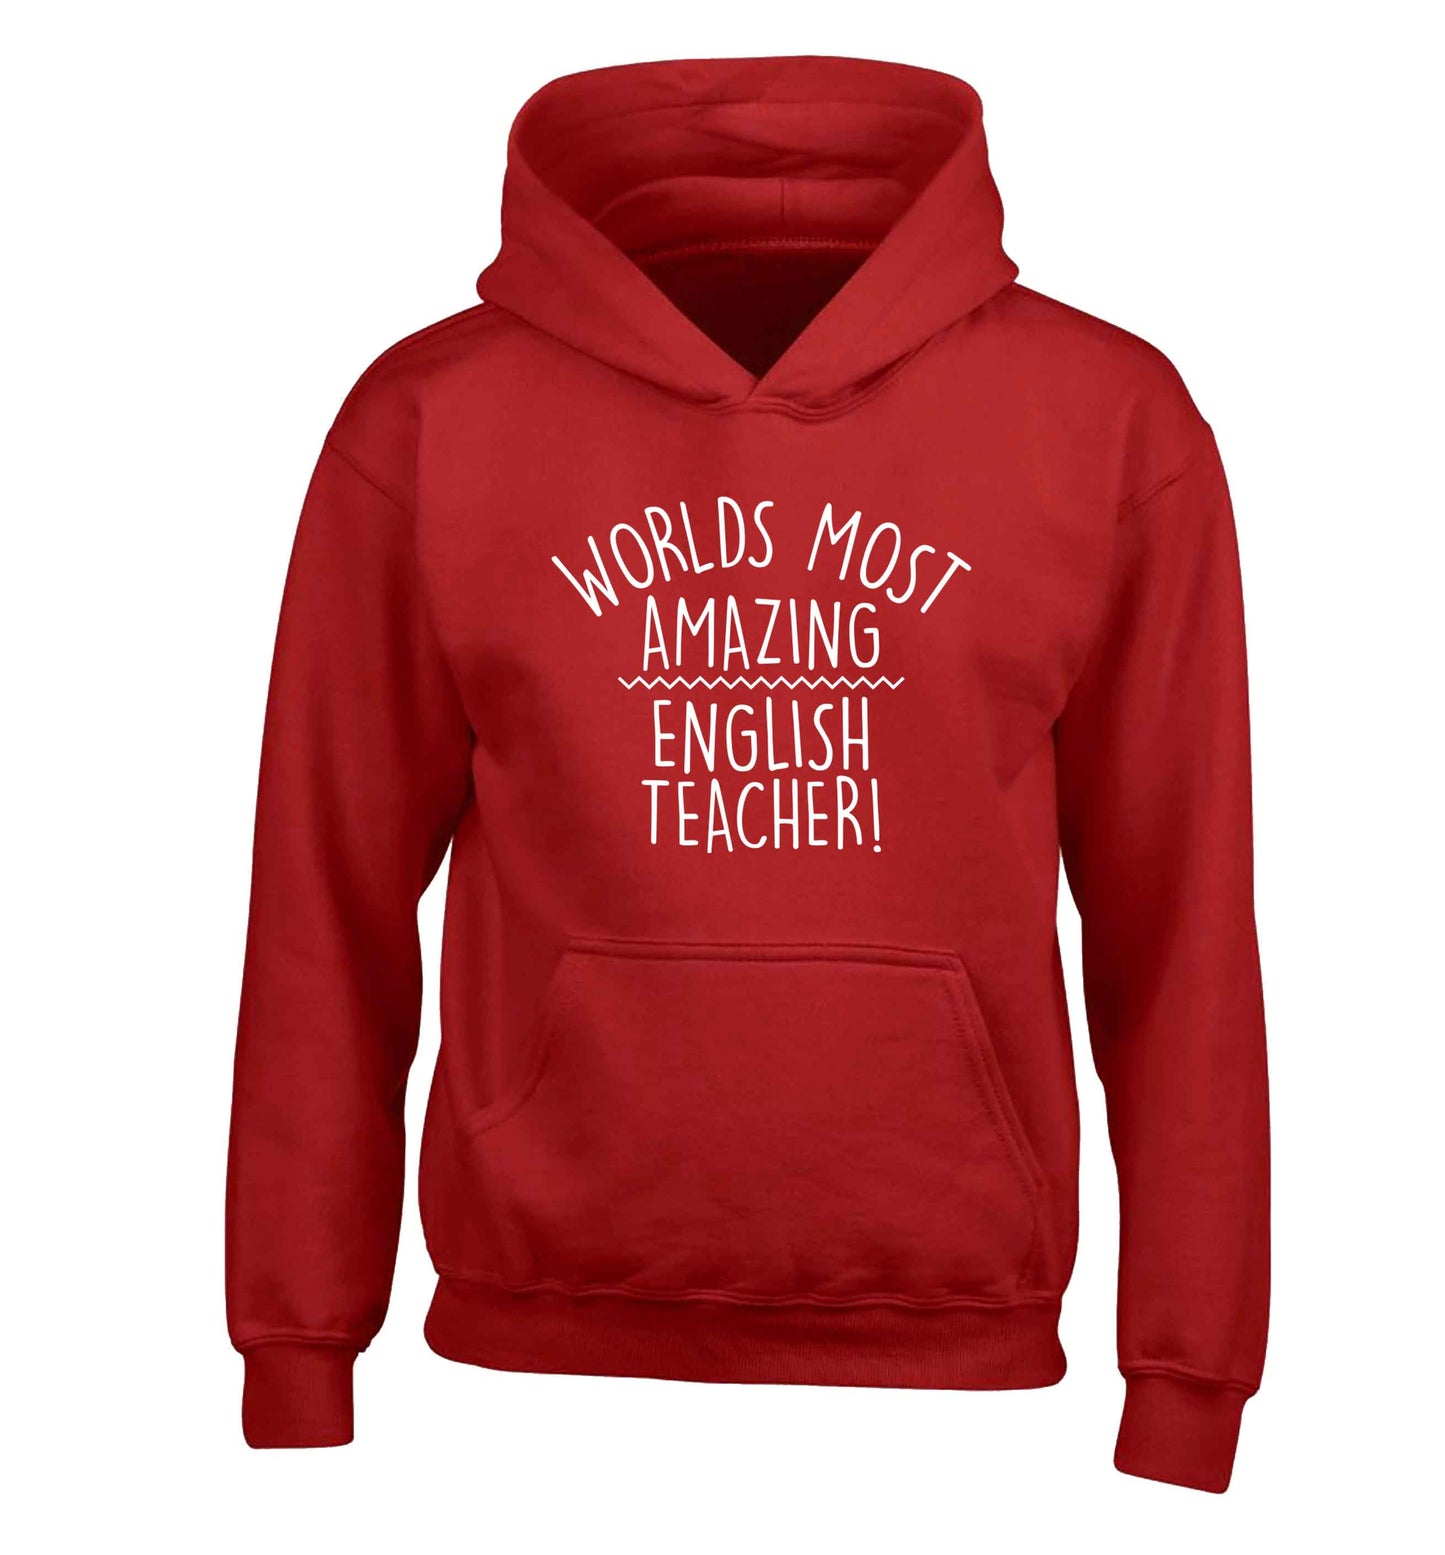 Worlds most amazing English teacher children's red hoodie 12-13 Years